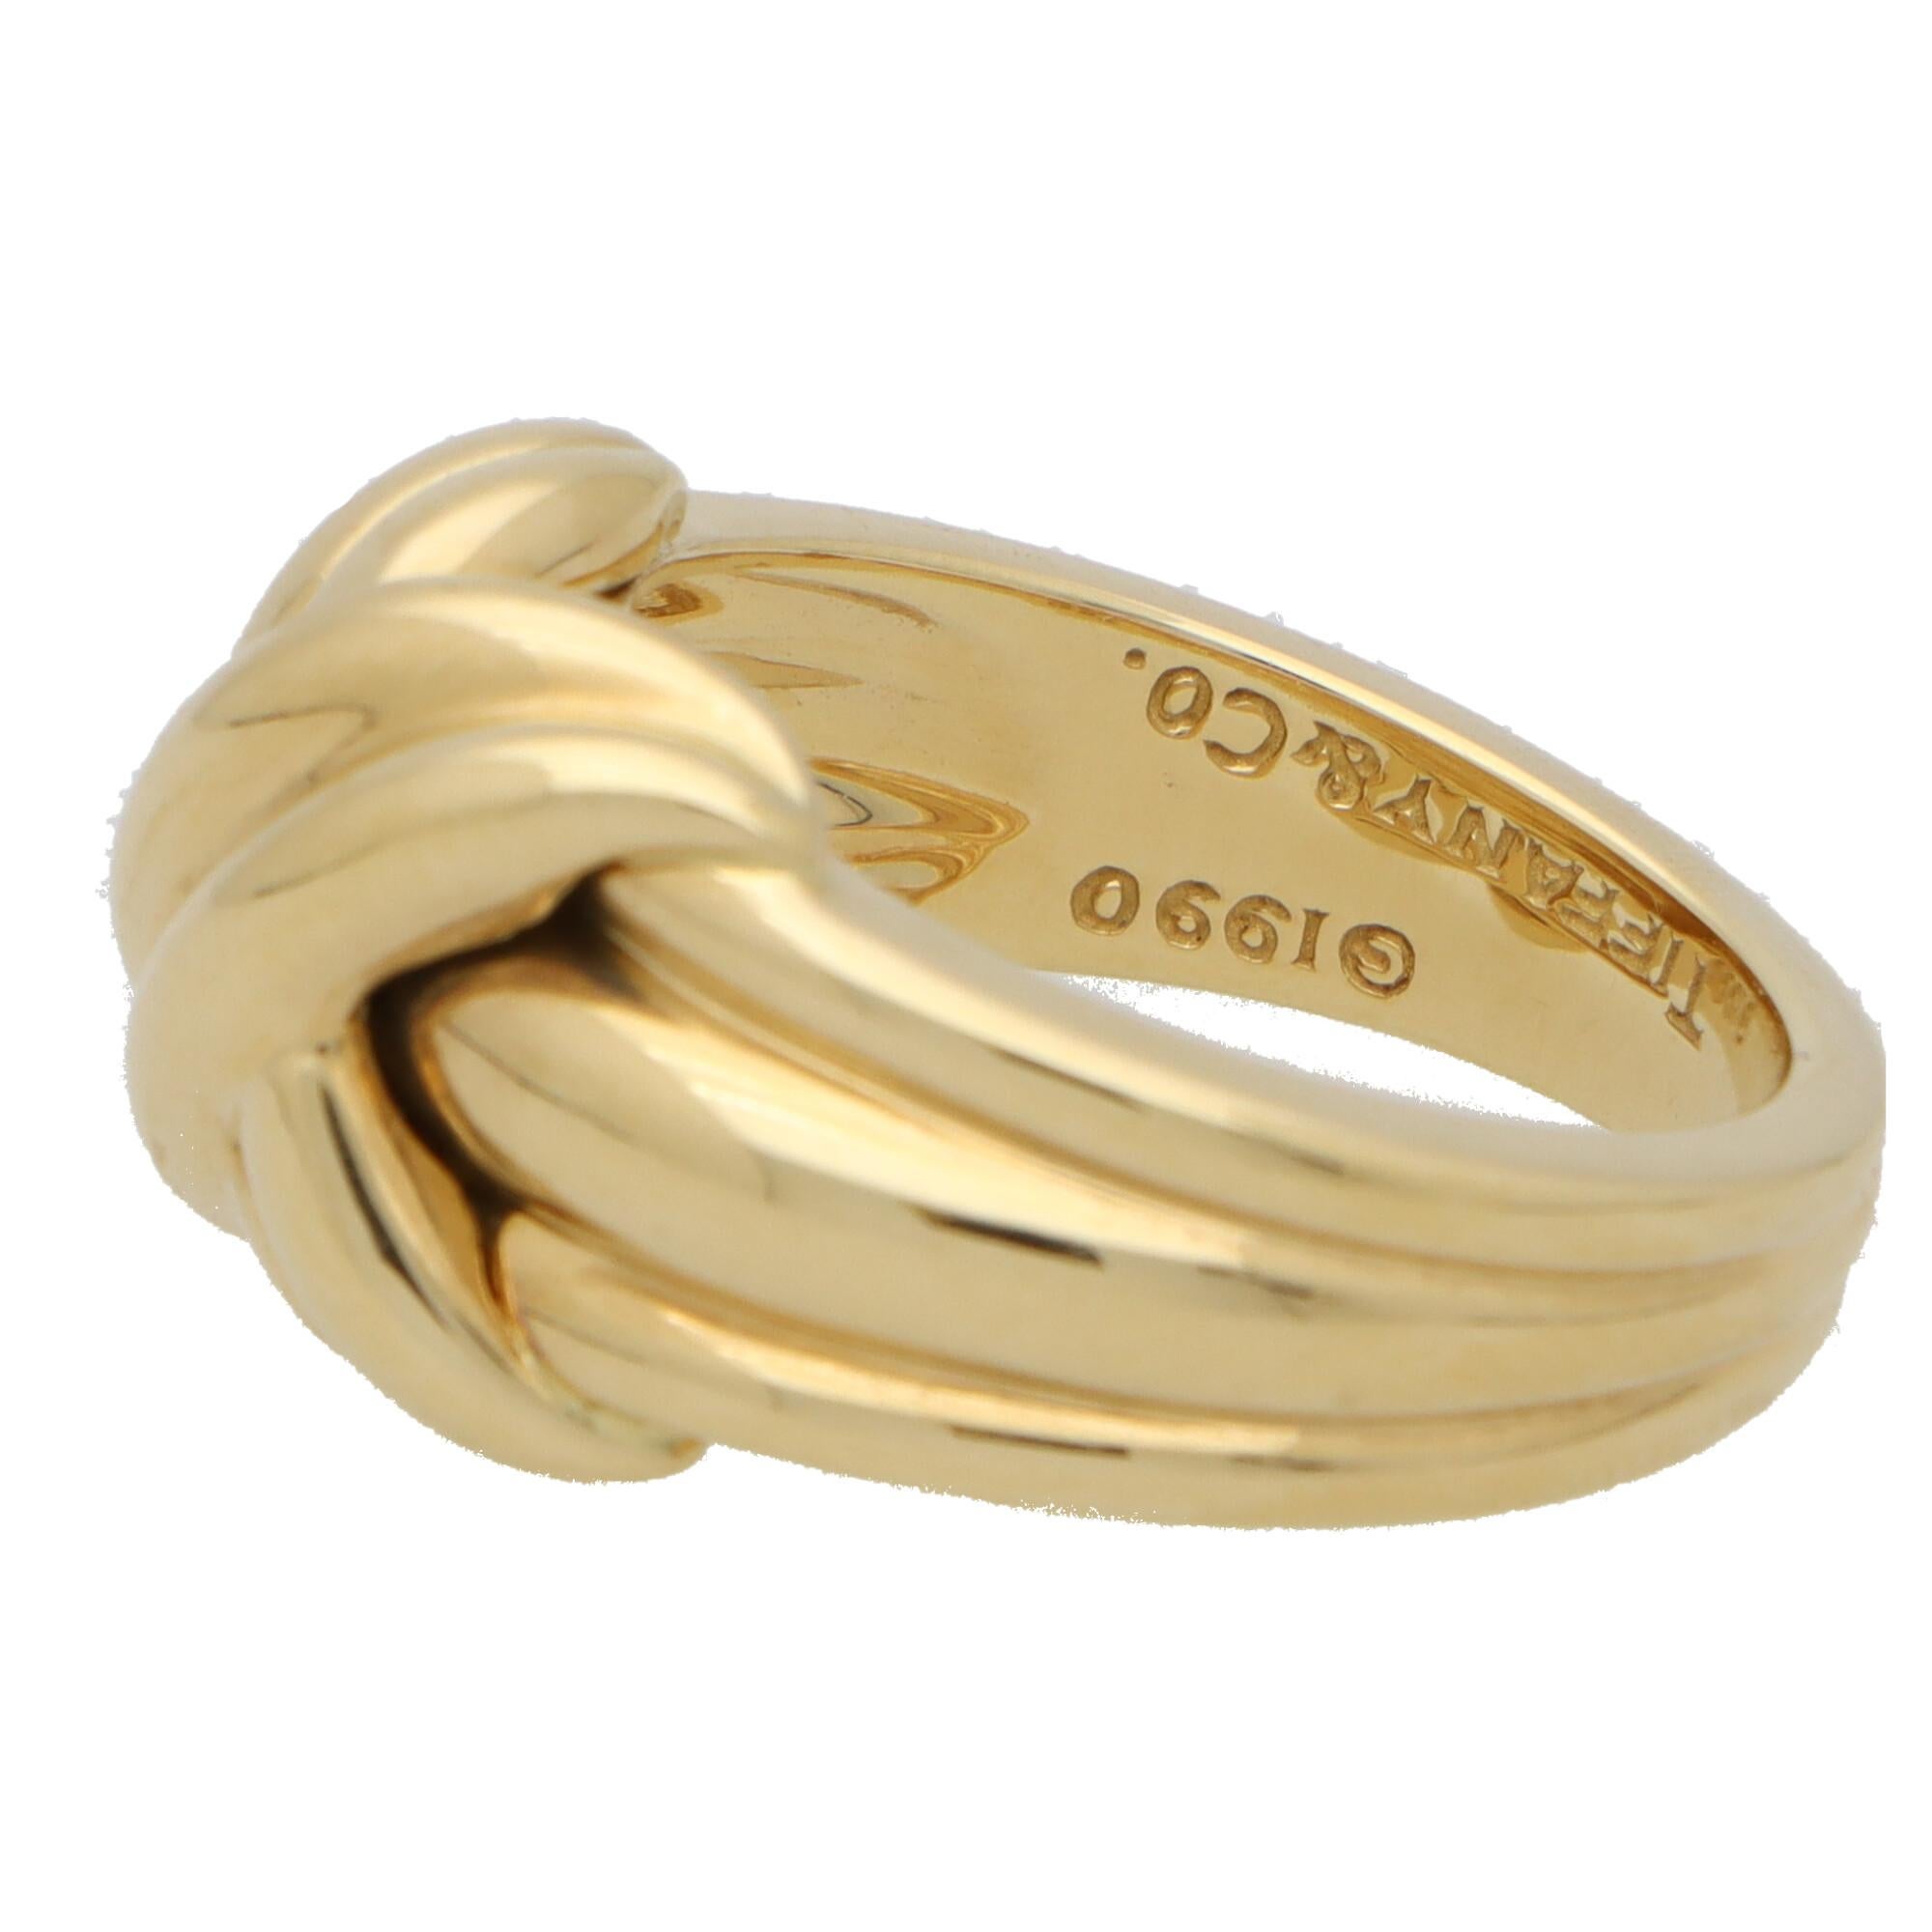 Retro Vintage Tiffany & Co. Signature Cross Ring Set in 18k Yellow Gold